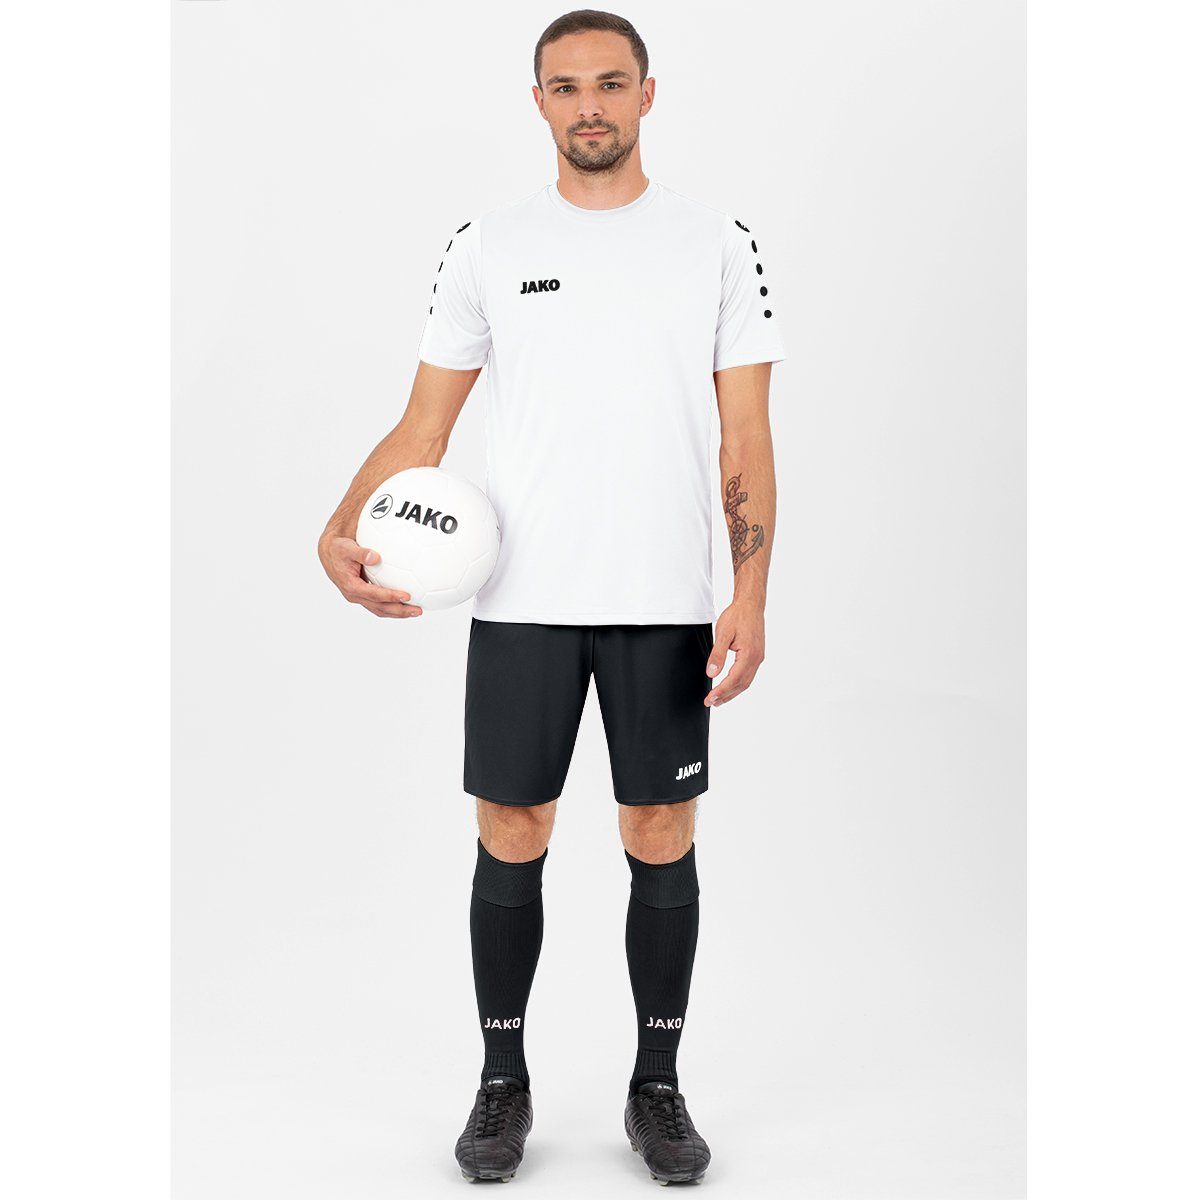 schwarz/weiý Shorts Sporthose 2.0 Jako Manchester